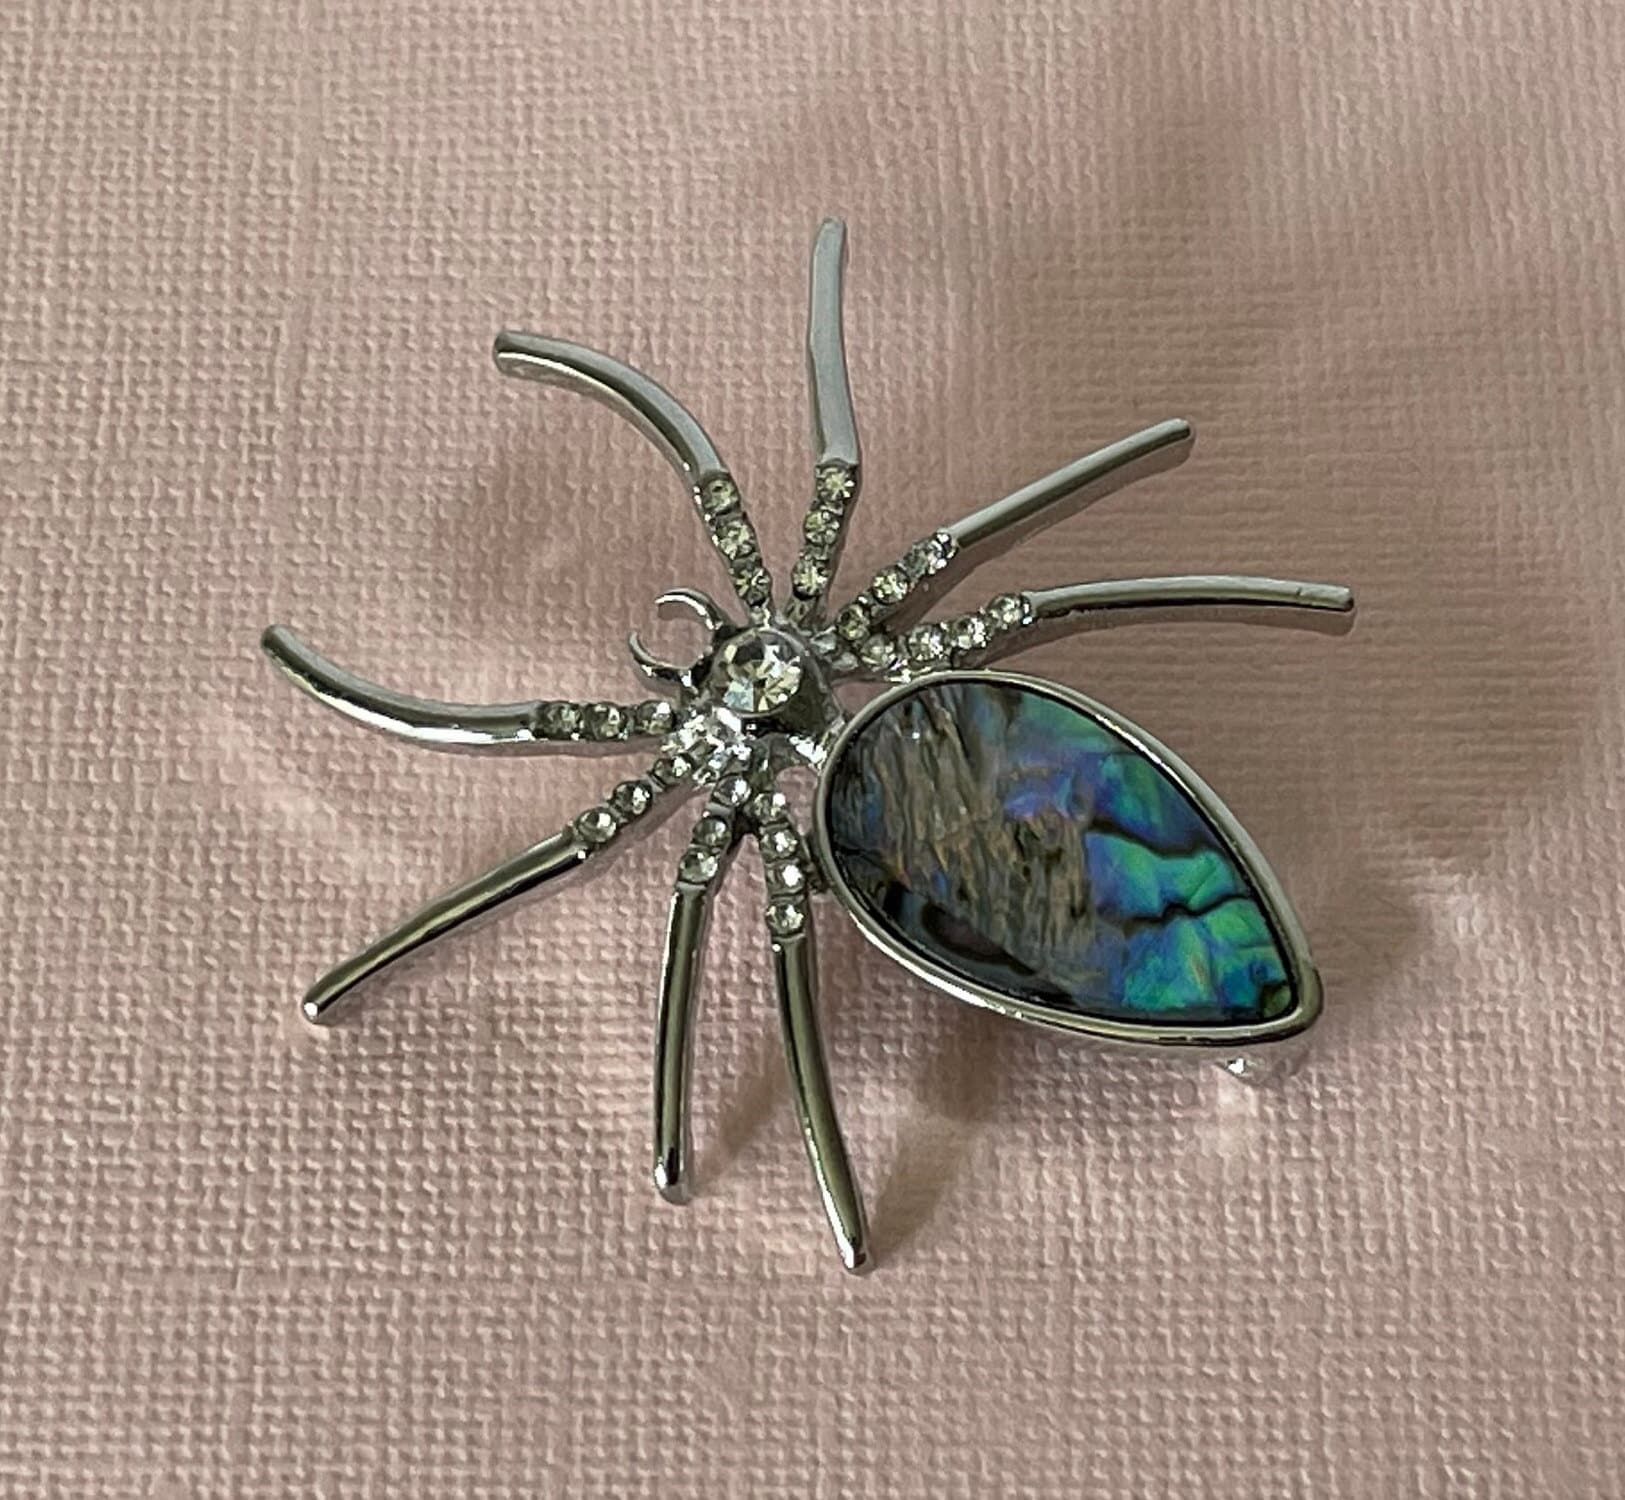 Striking Silver Tone and Diamanté Spider Brooch. 